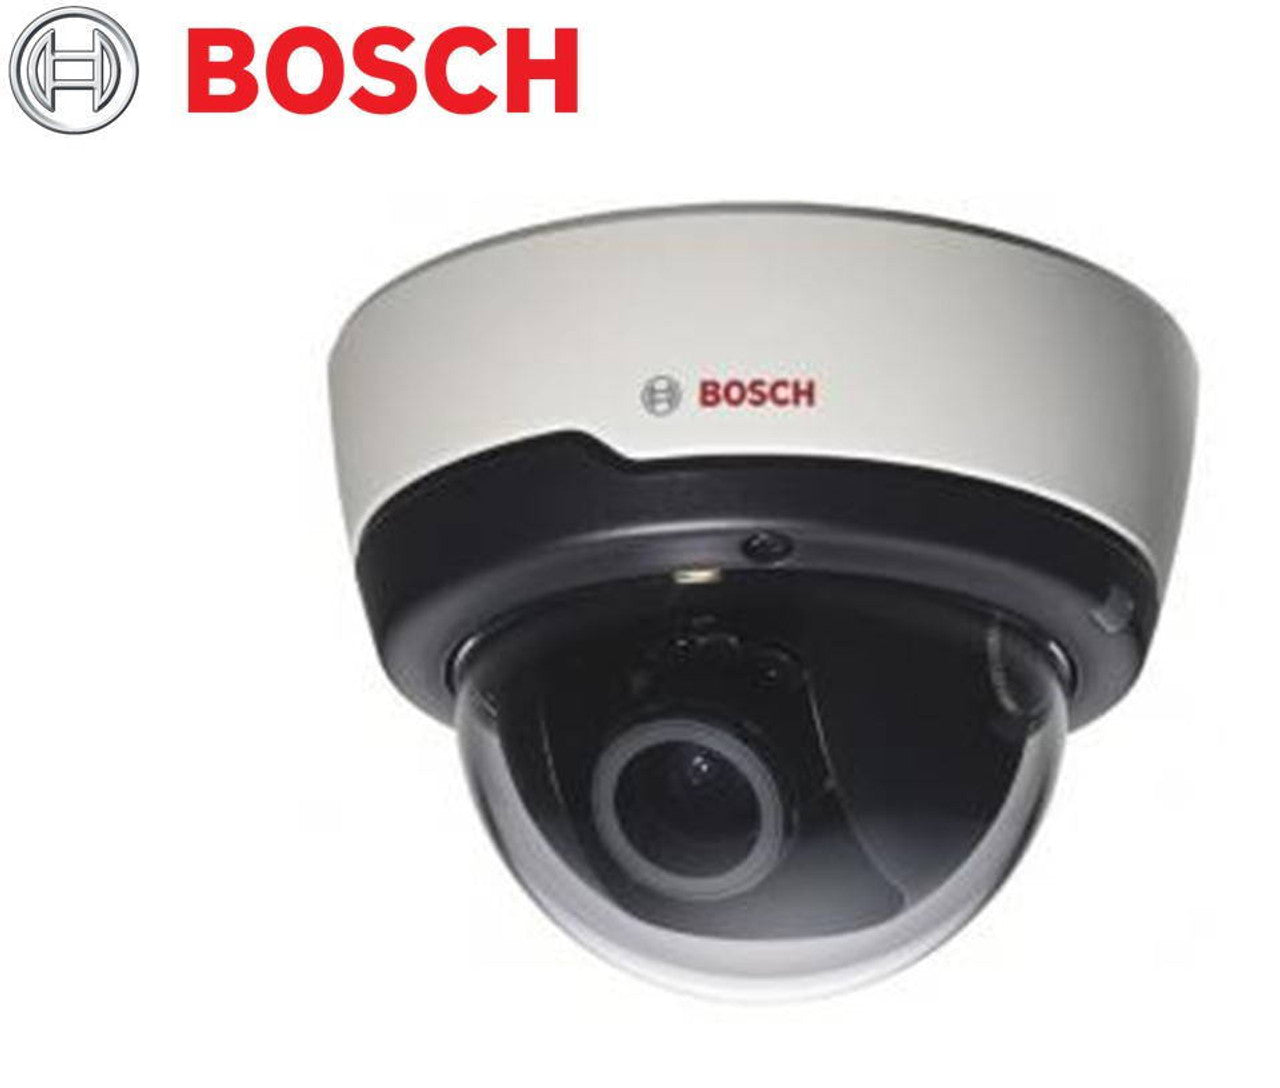 Bosch NIN-41012-V3 - IP Indoor Dome Camera 720P, 3-10mm, 12VDC or PoE